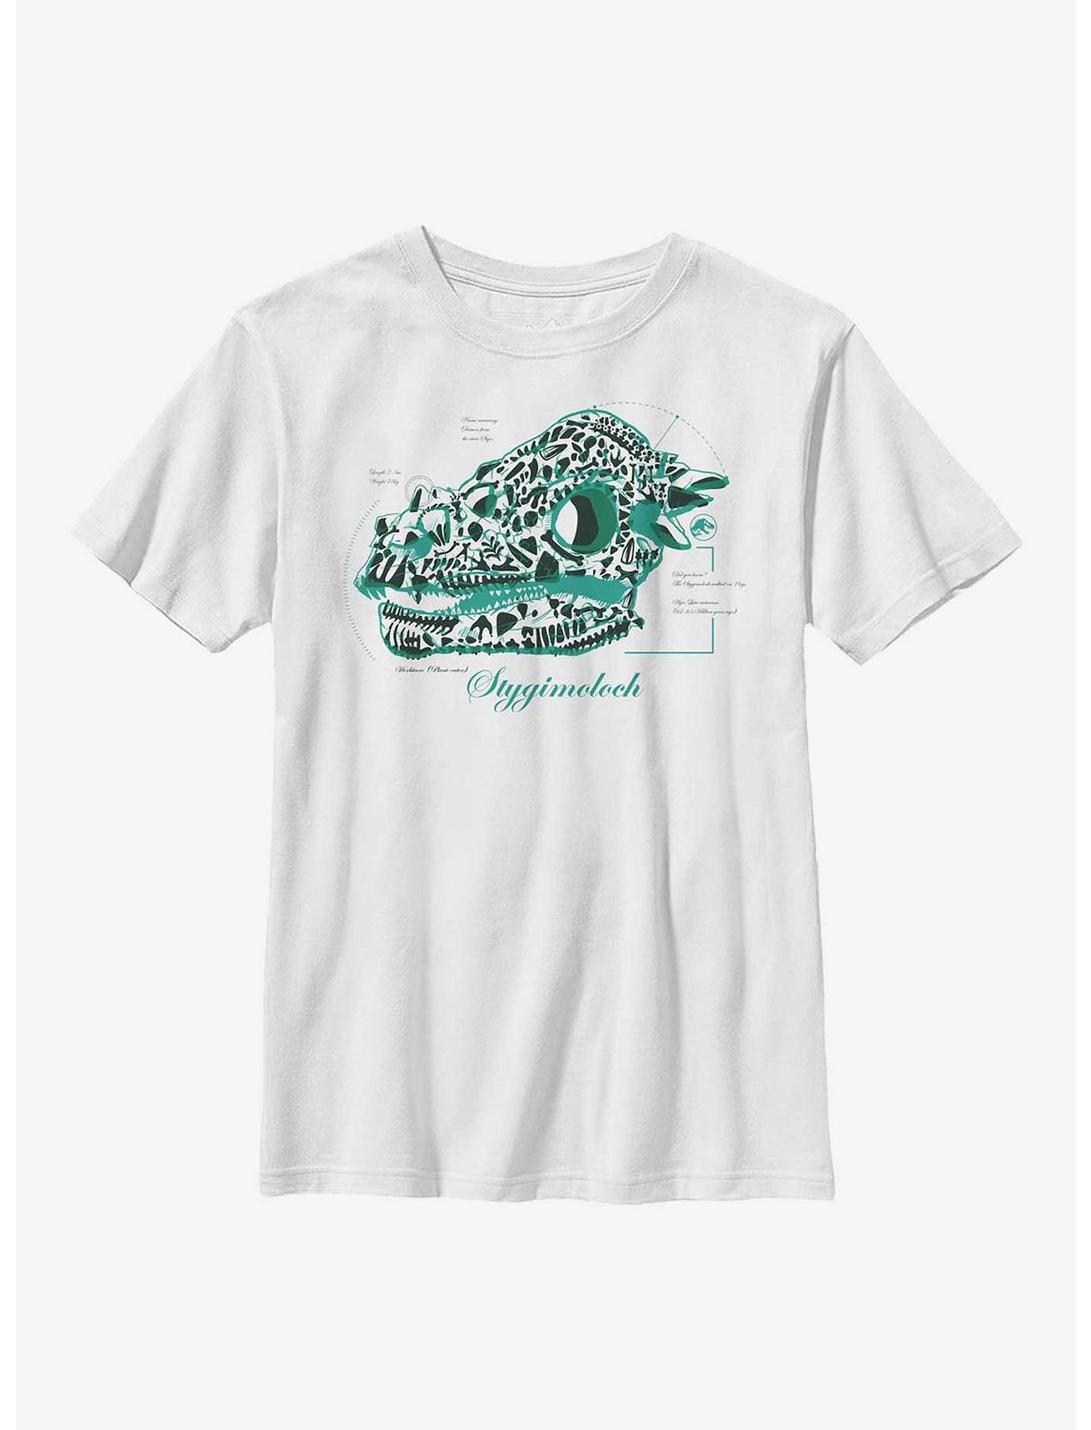 Jurassic Park Sygimoloch Xray Youth T-Shirt, WHITE, hi-res